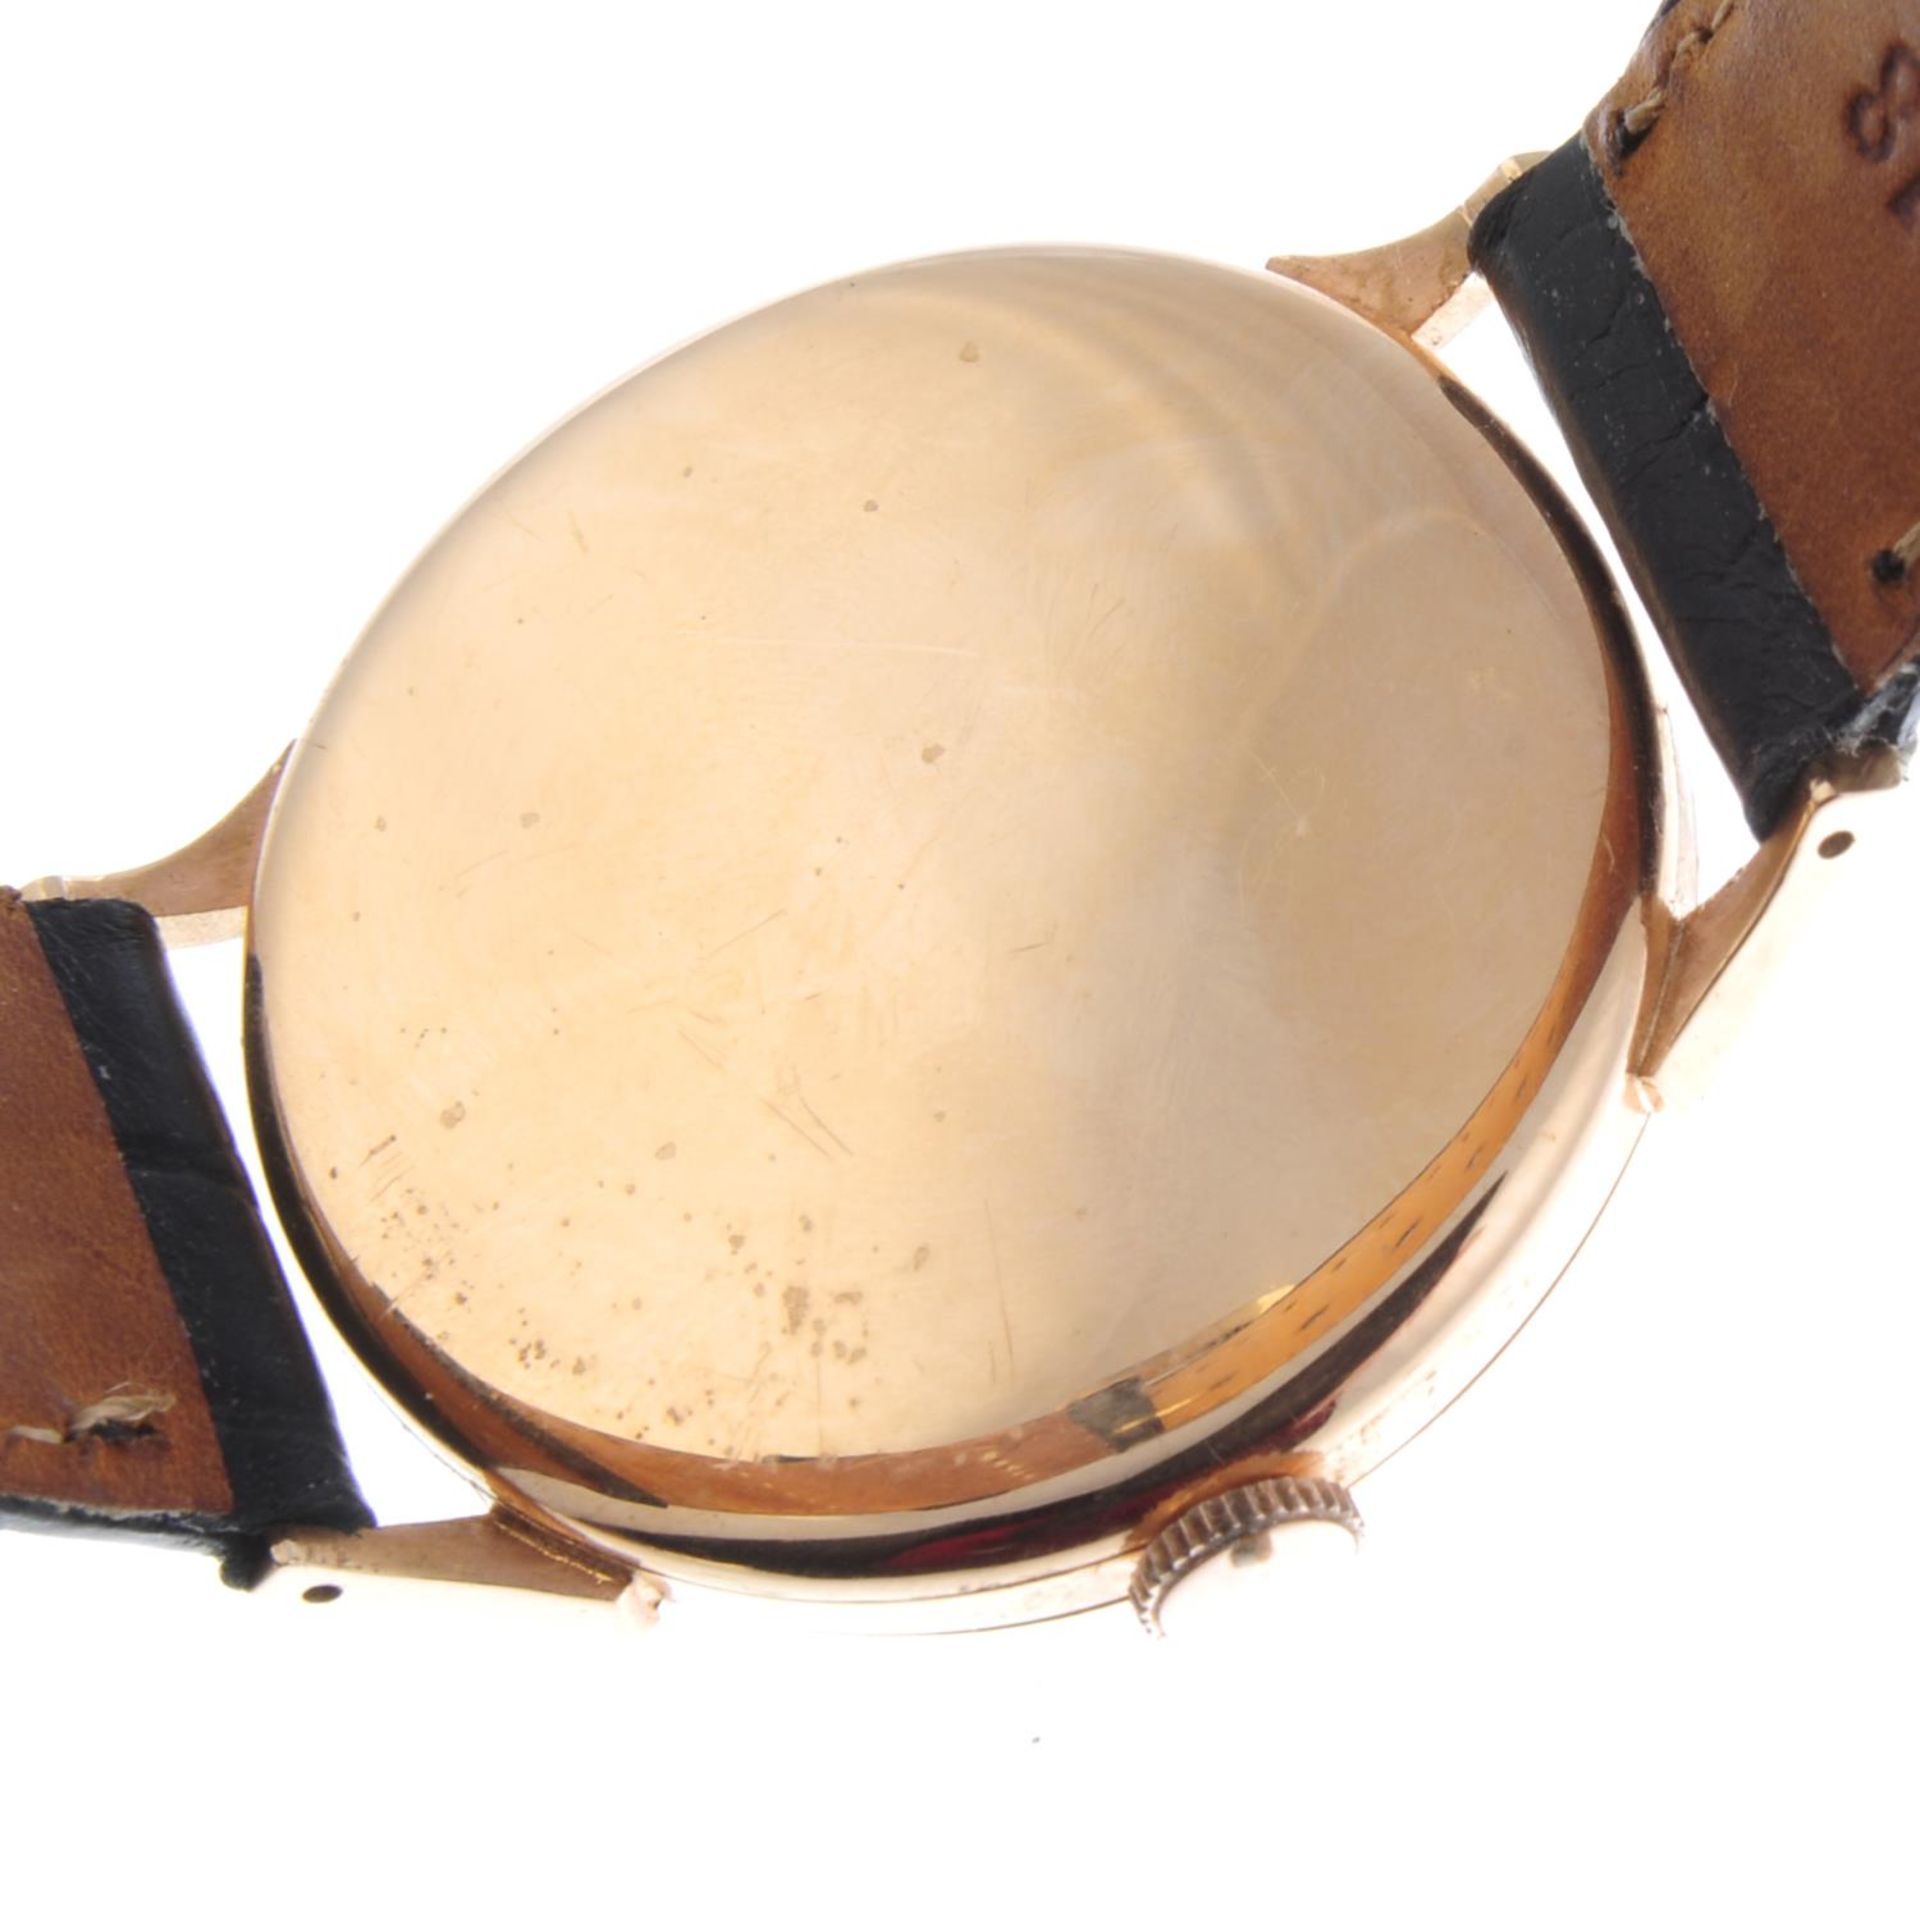 GIRARD-PERREGAUX - a gentleman's wrist watch. - Image 2 of 4